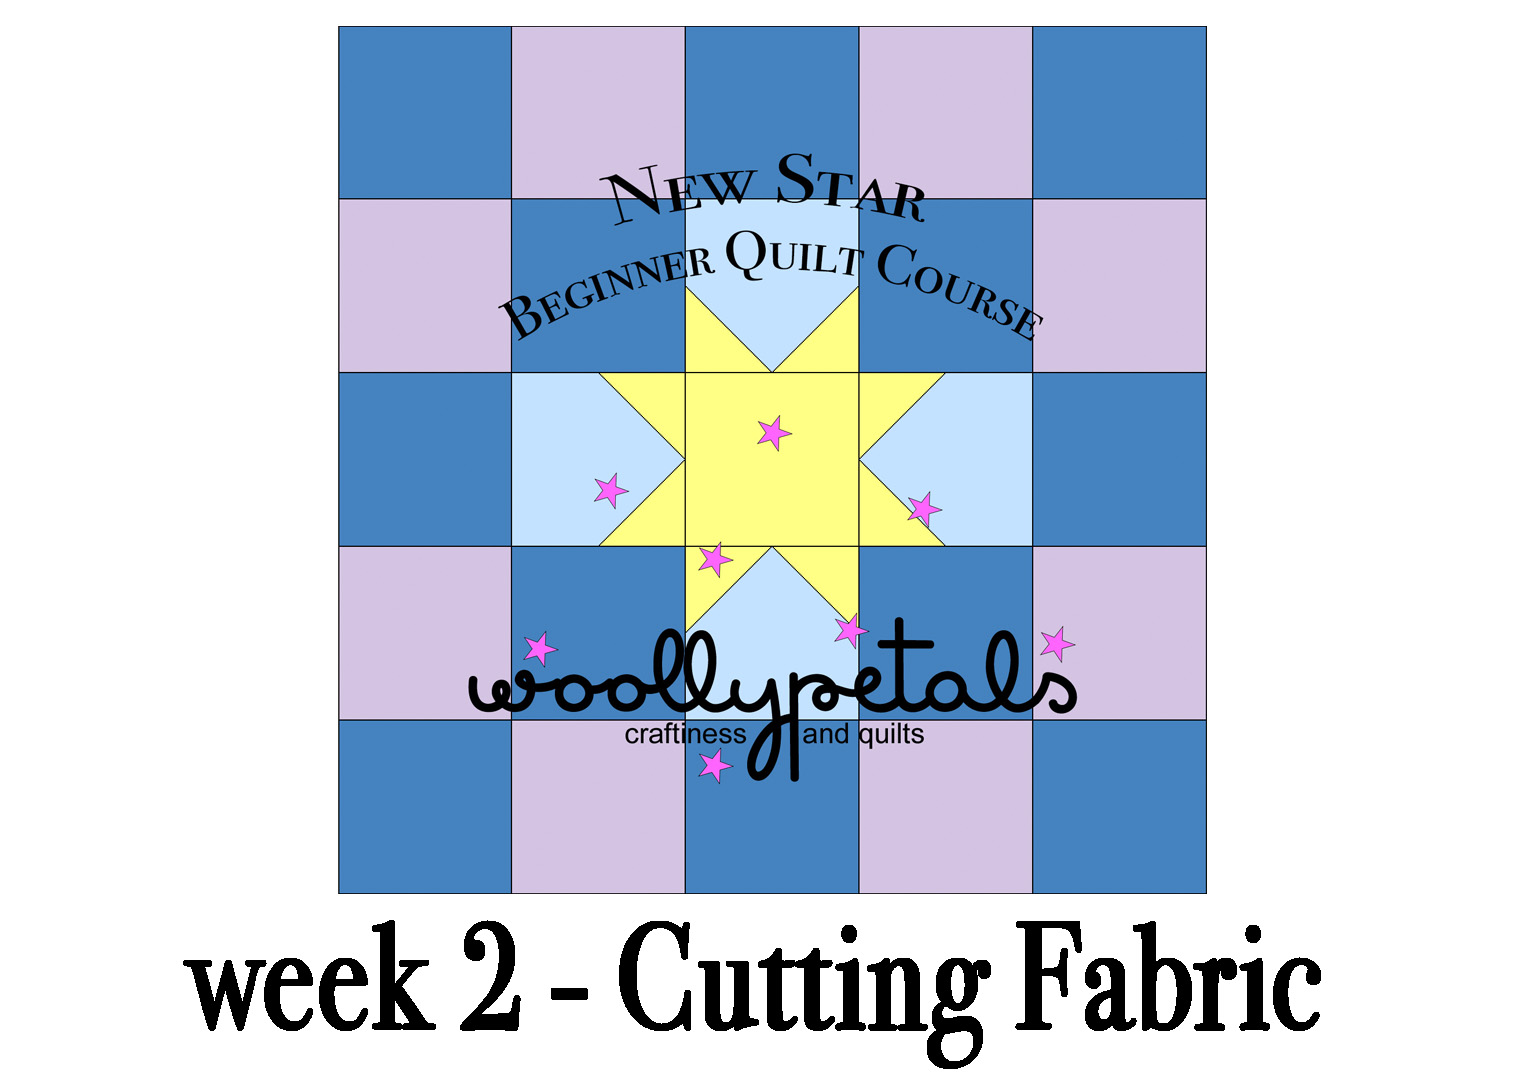 woollypetals New Star Beginner Quilt Course Week 2 Image